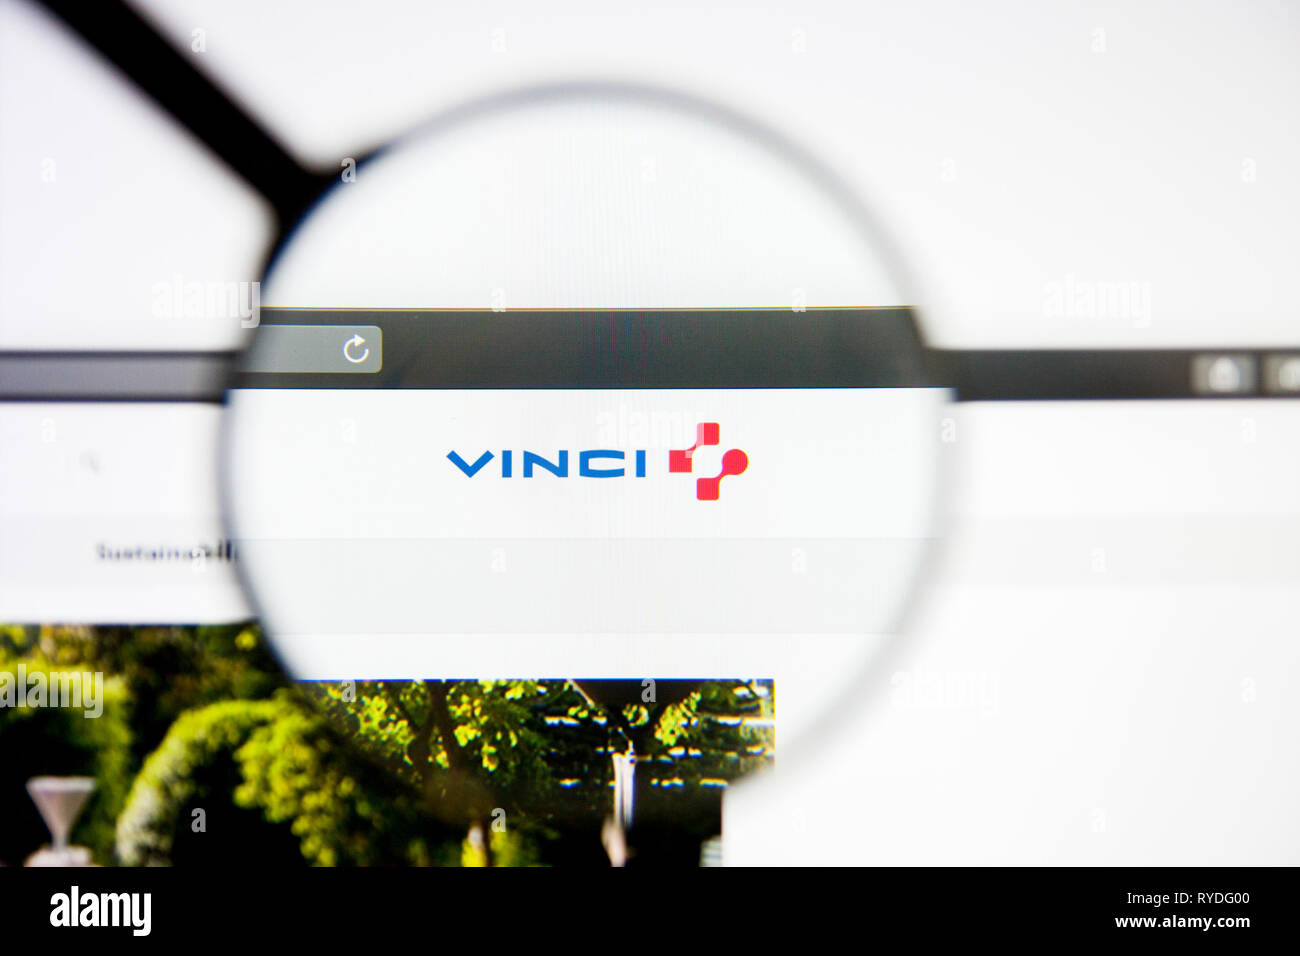 Los Angeles, Kalifornien, USA - 5. März 2019: VINCI-Website Homepage. VINCI Logo sichtbar auf dem Display, Illustrative Editorial Stockfoto